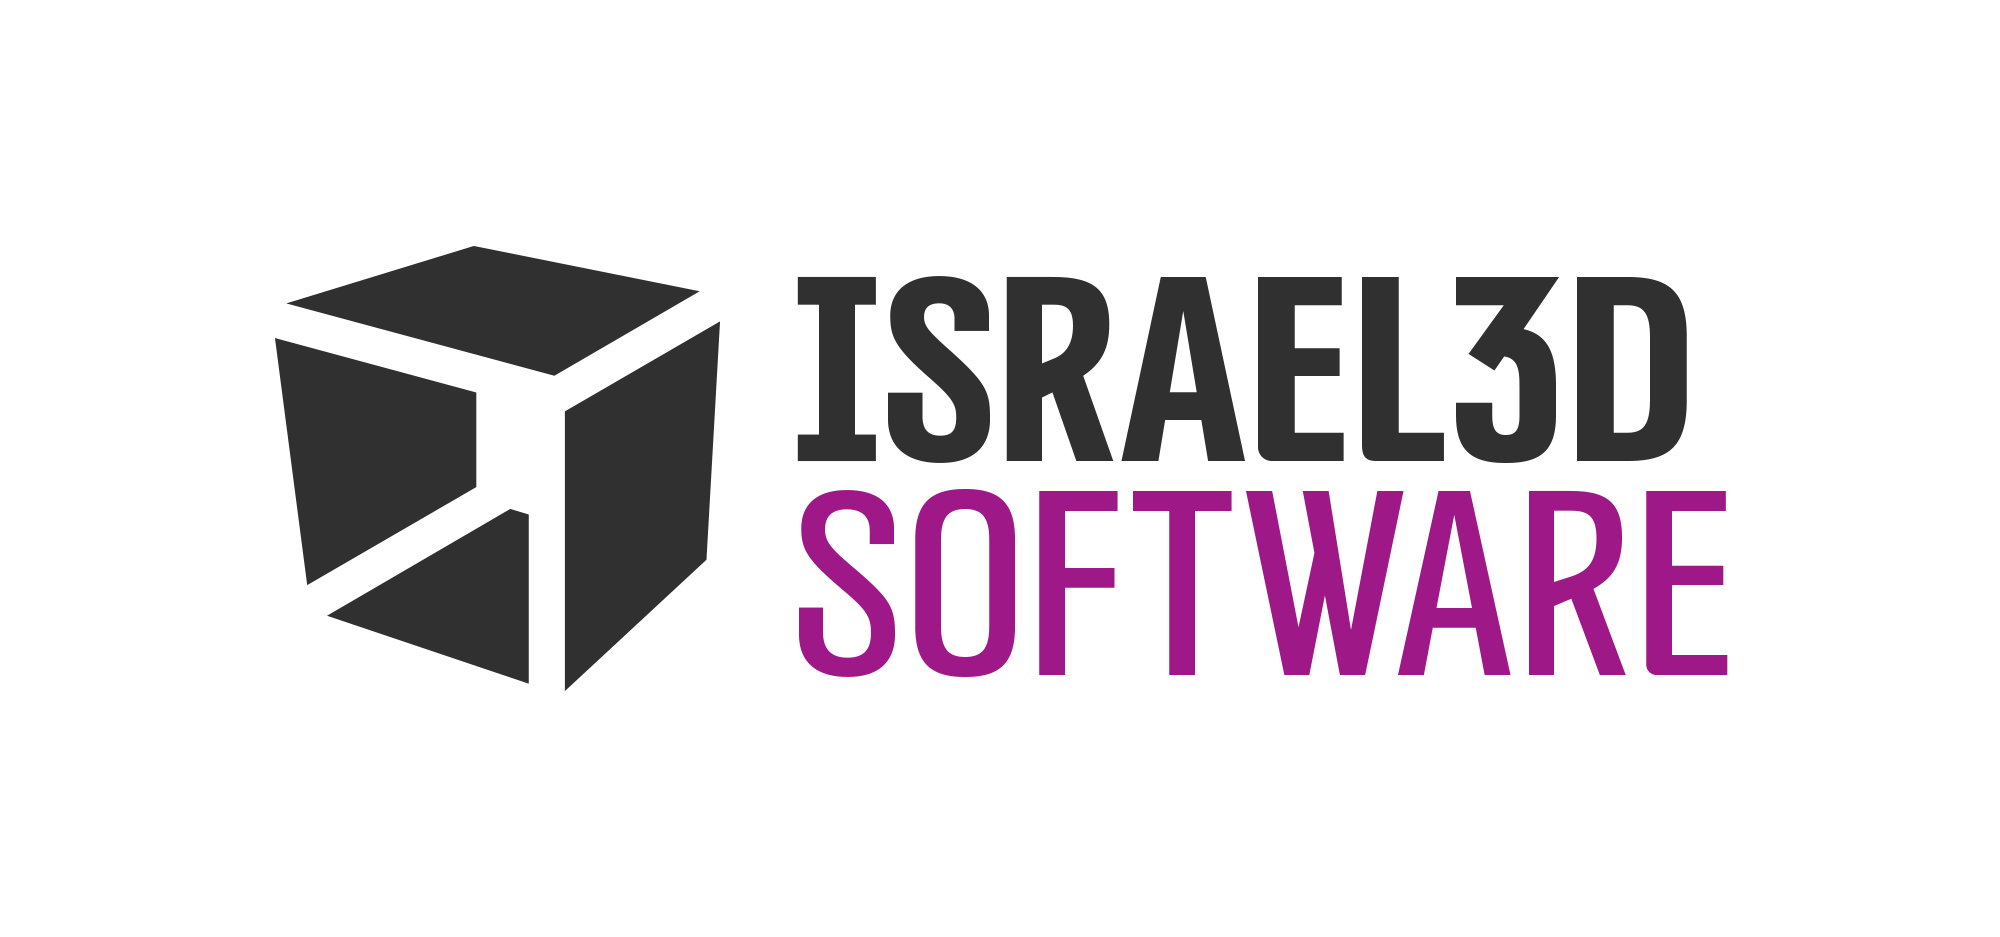 israel3d_x_logos_software_w2k